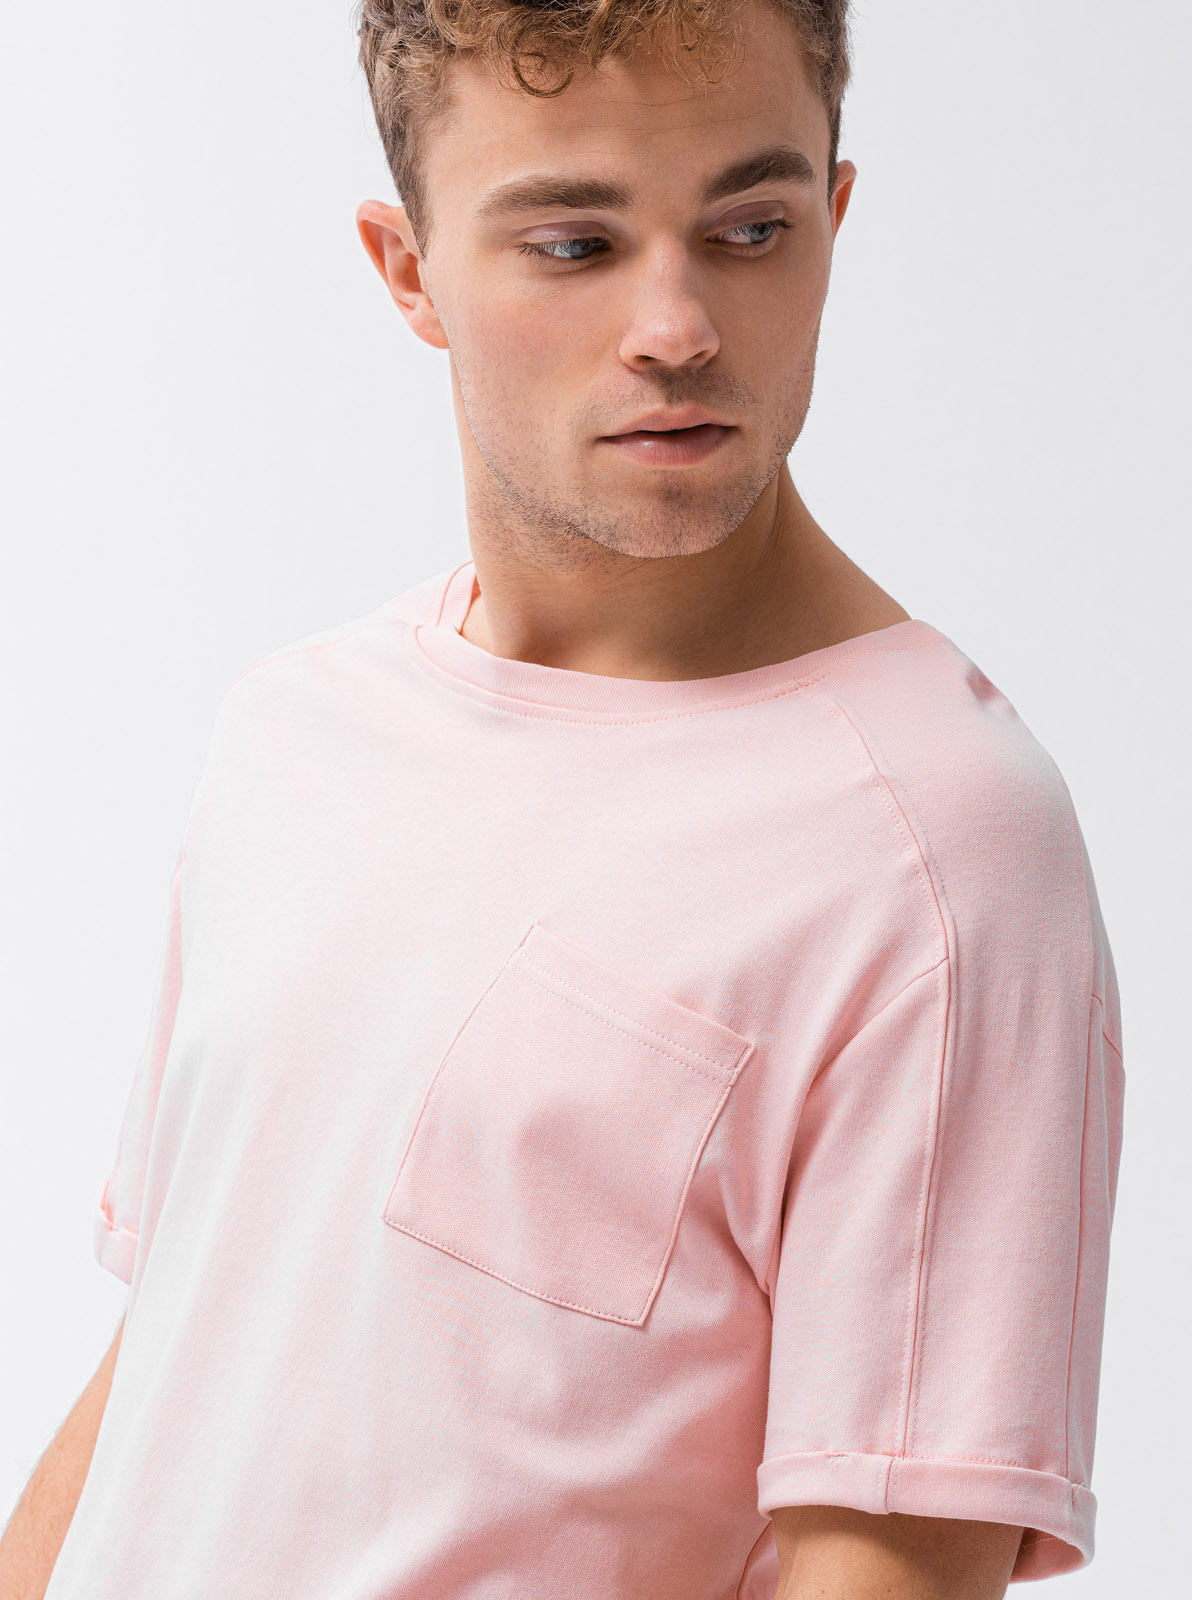 pink t shirt for men